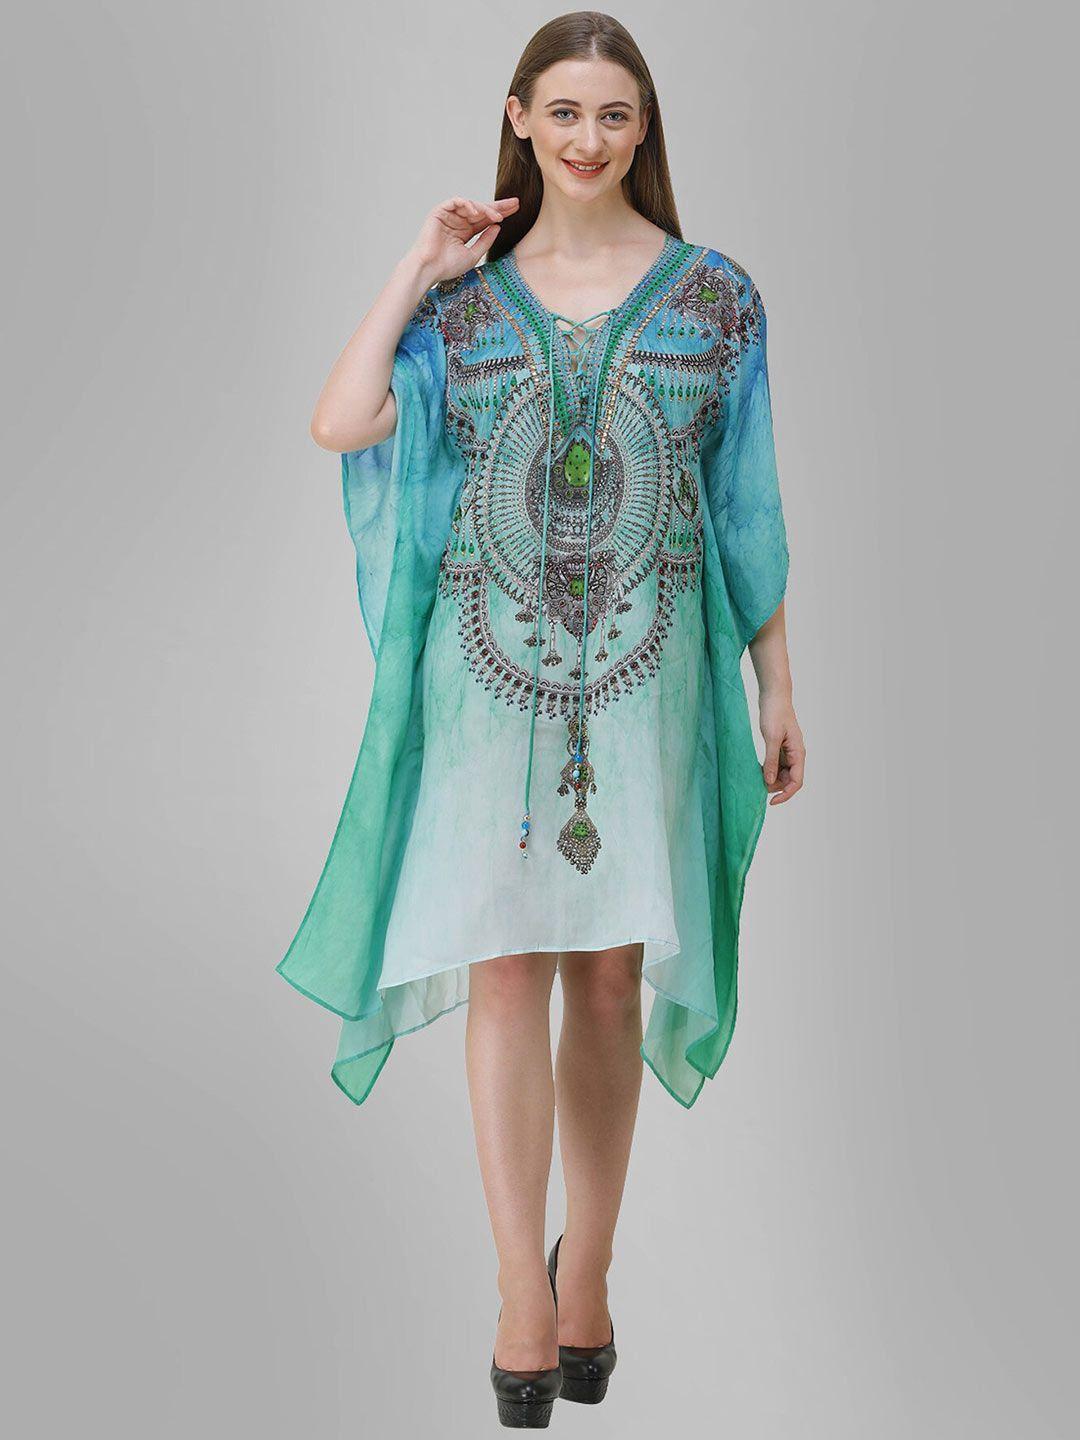 rajoria instyle sea green ethnic motifs georgette kaftan dress